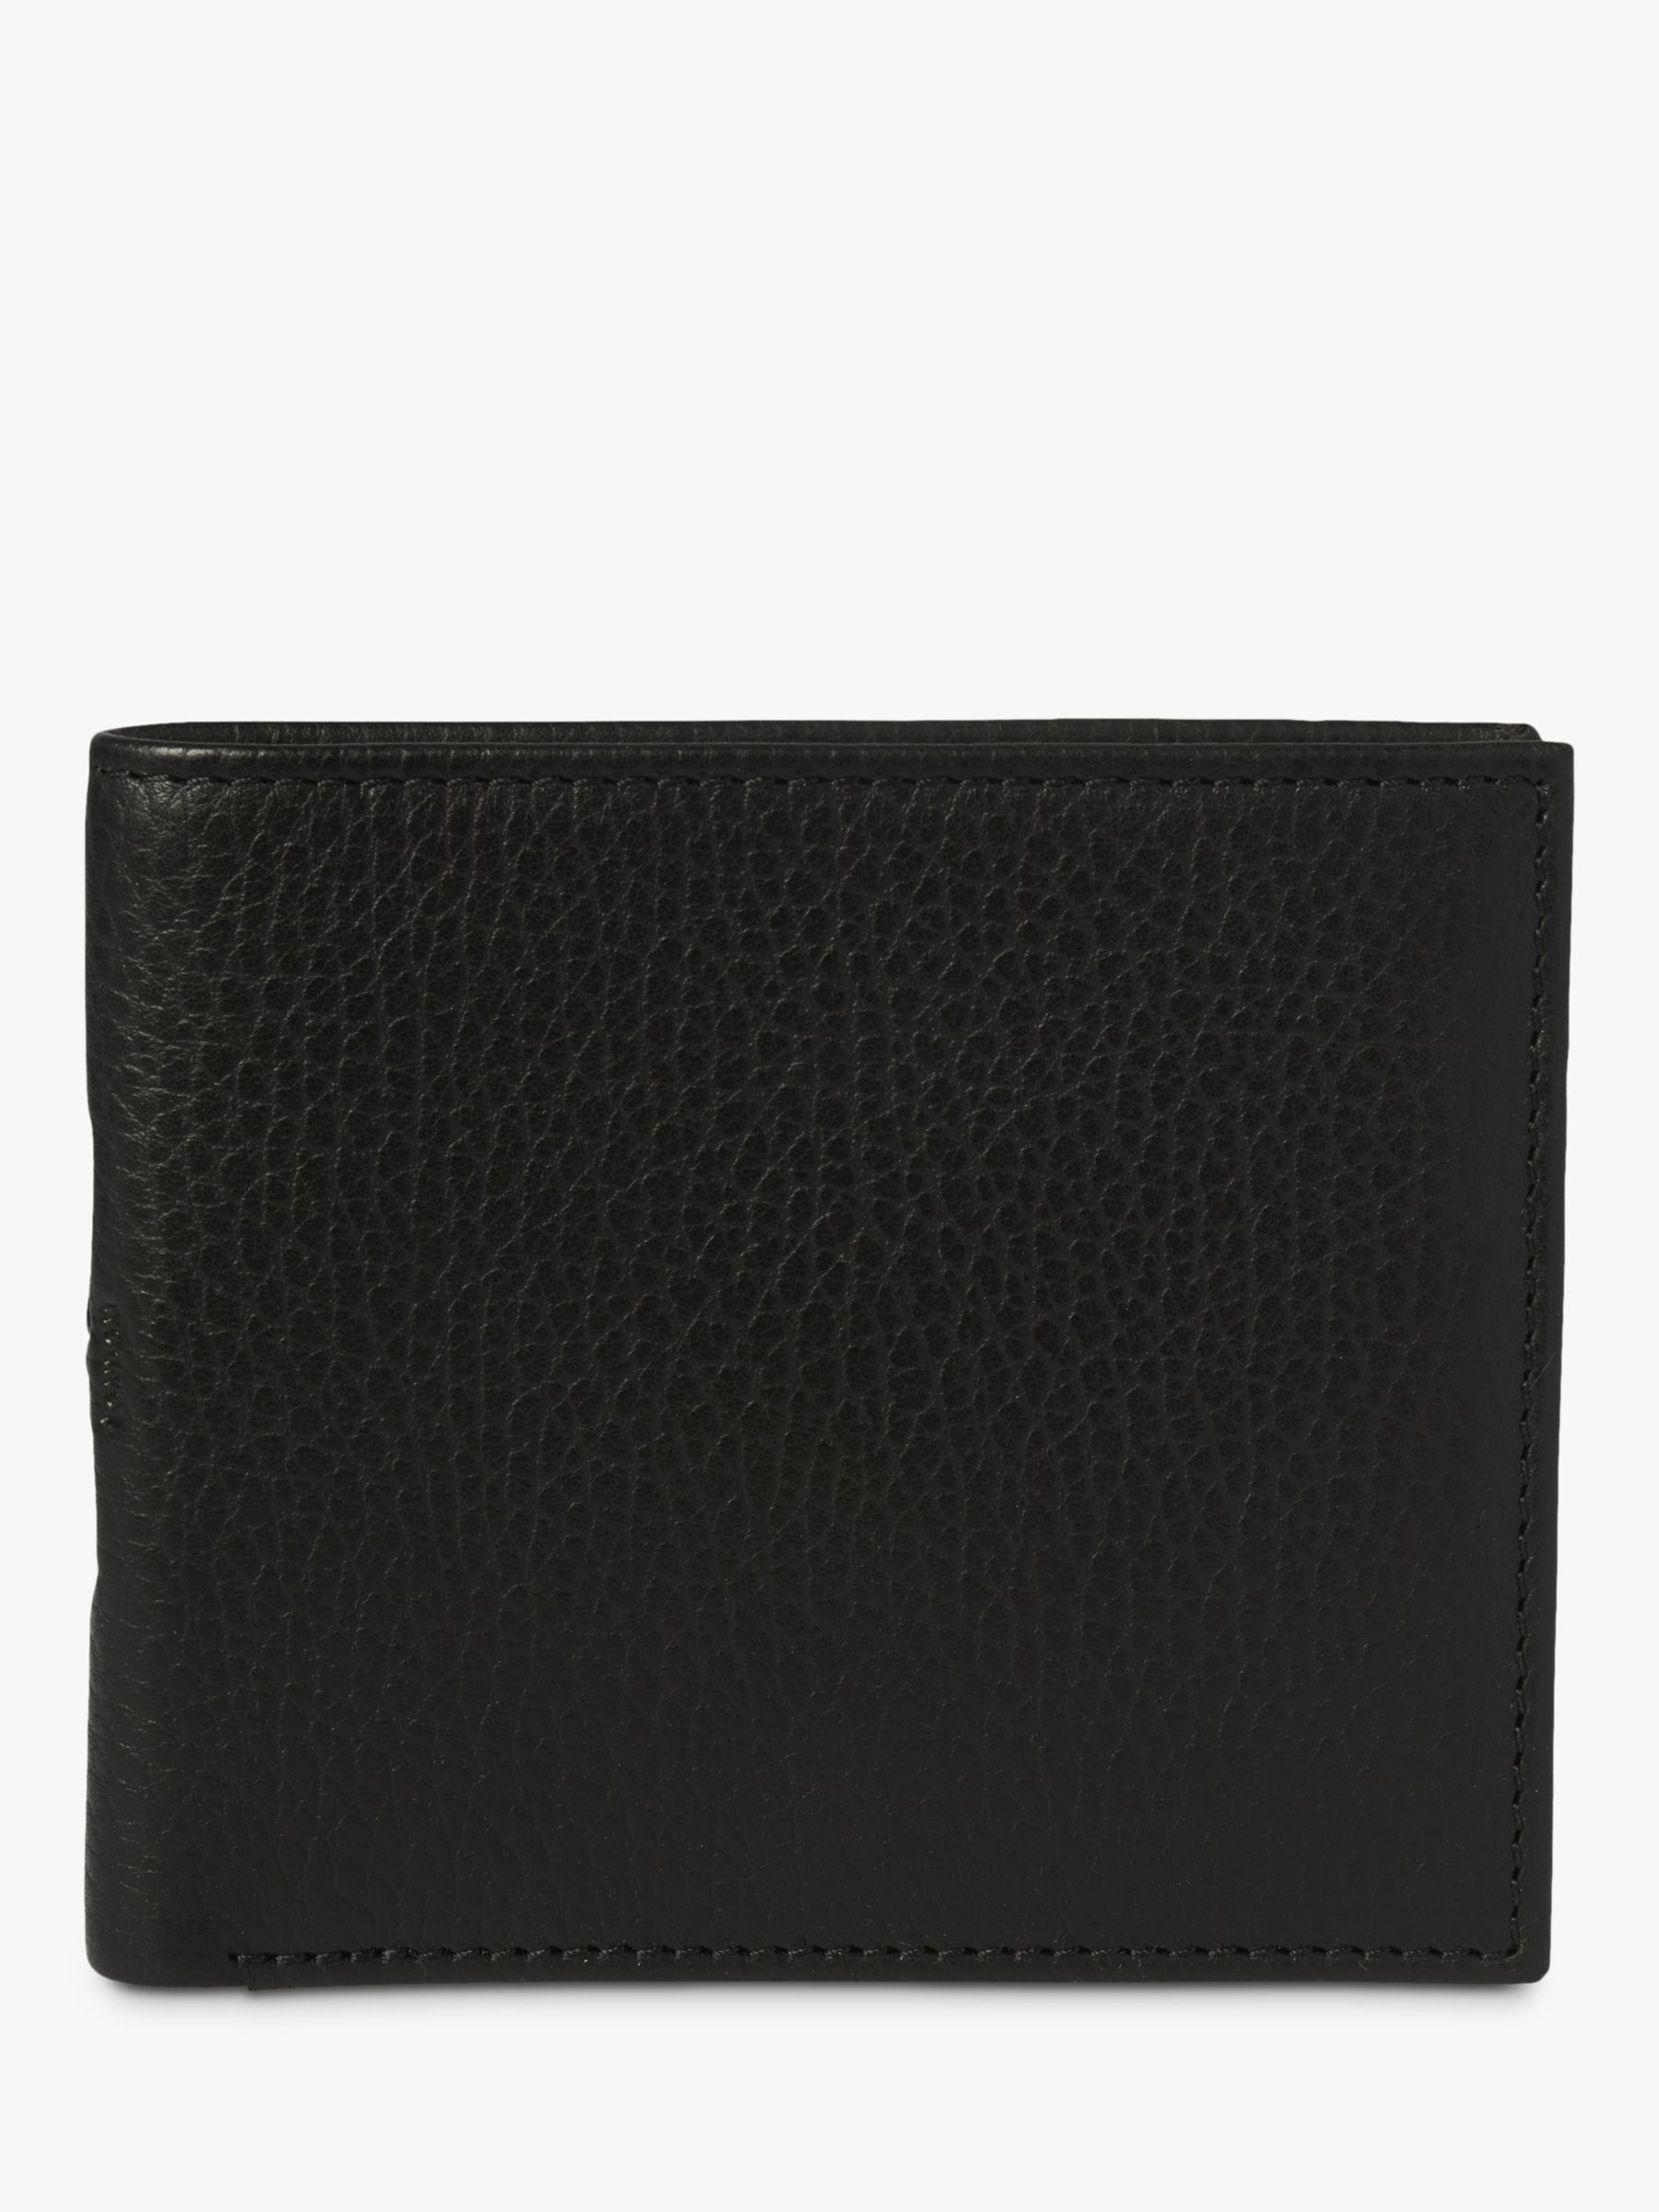 Simon Carter West End Leather Wallet